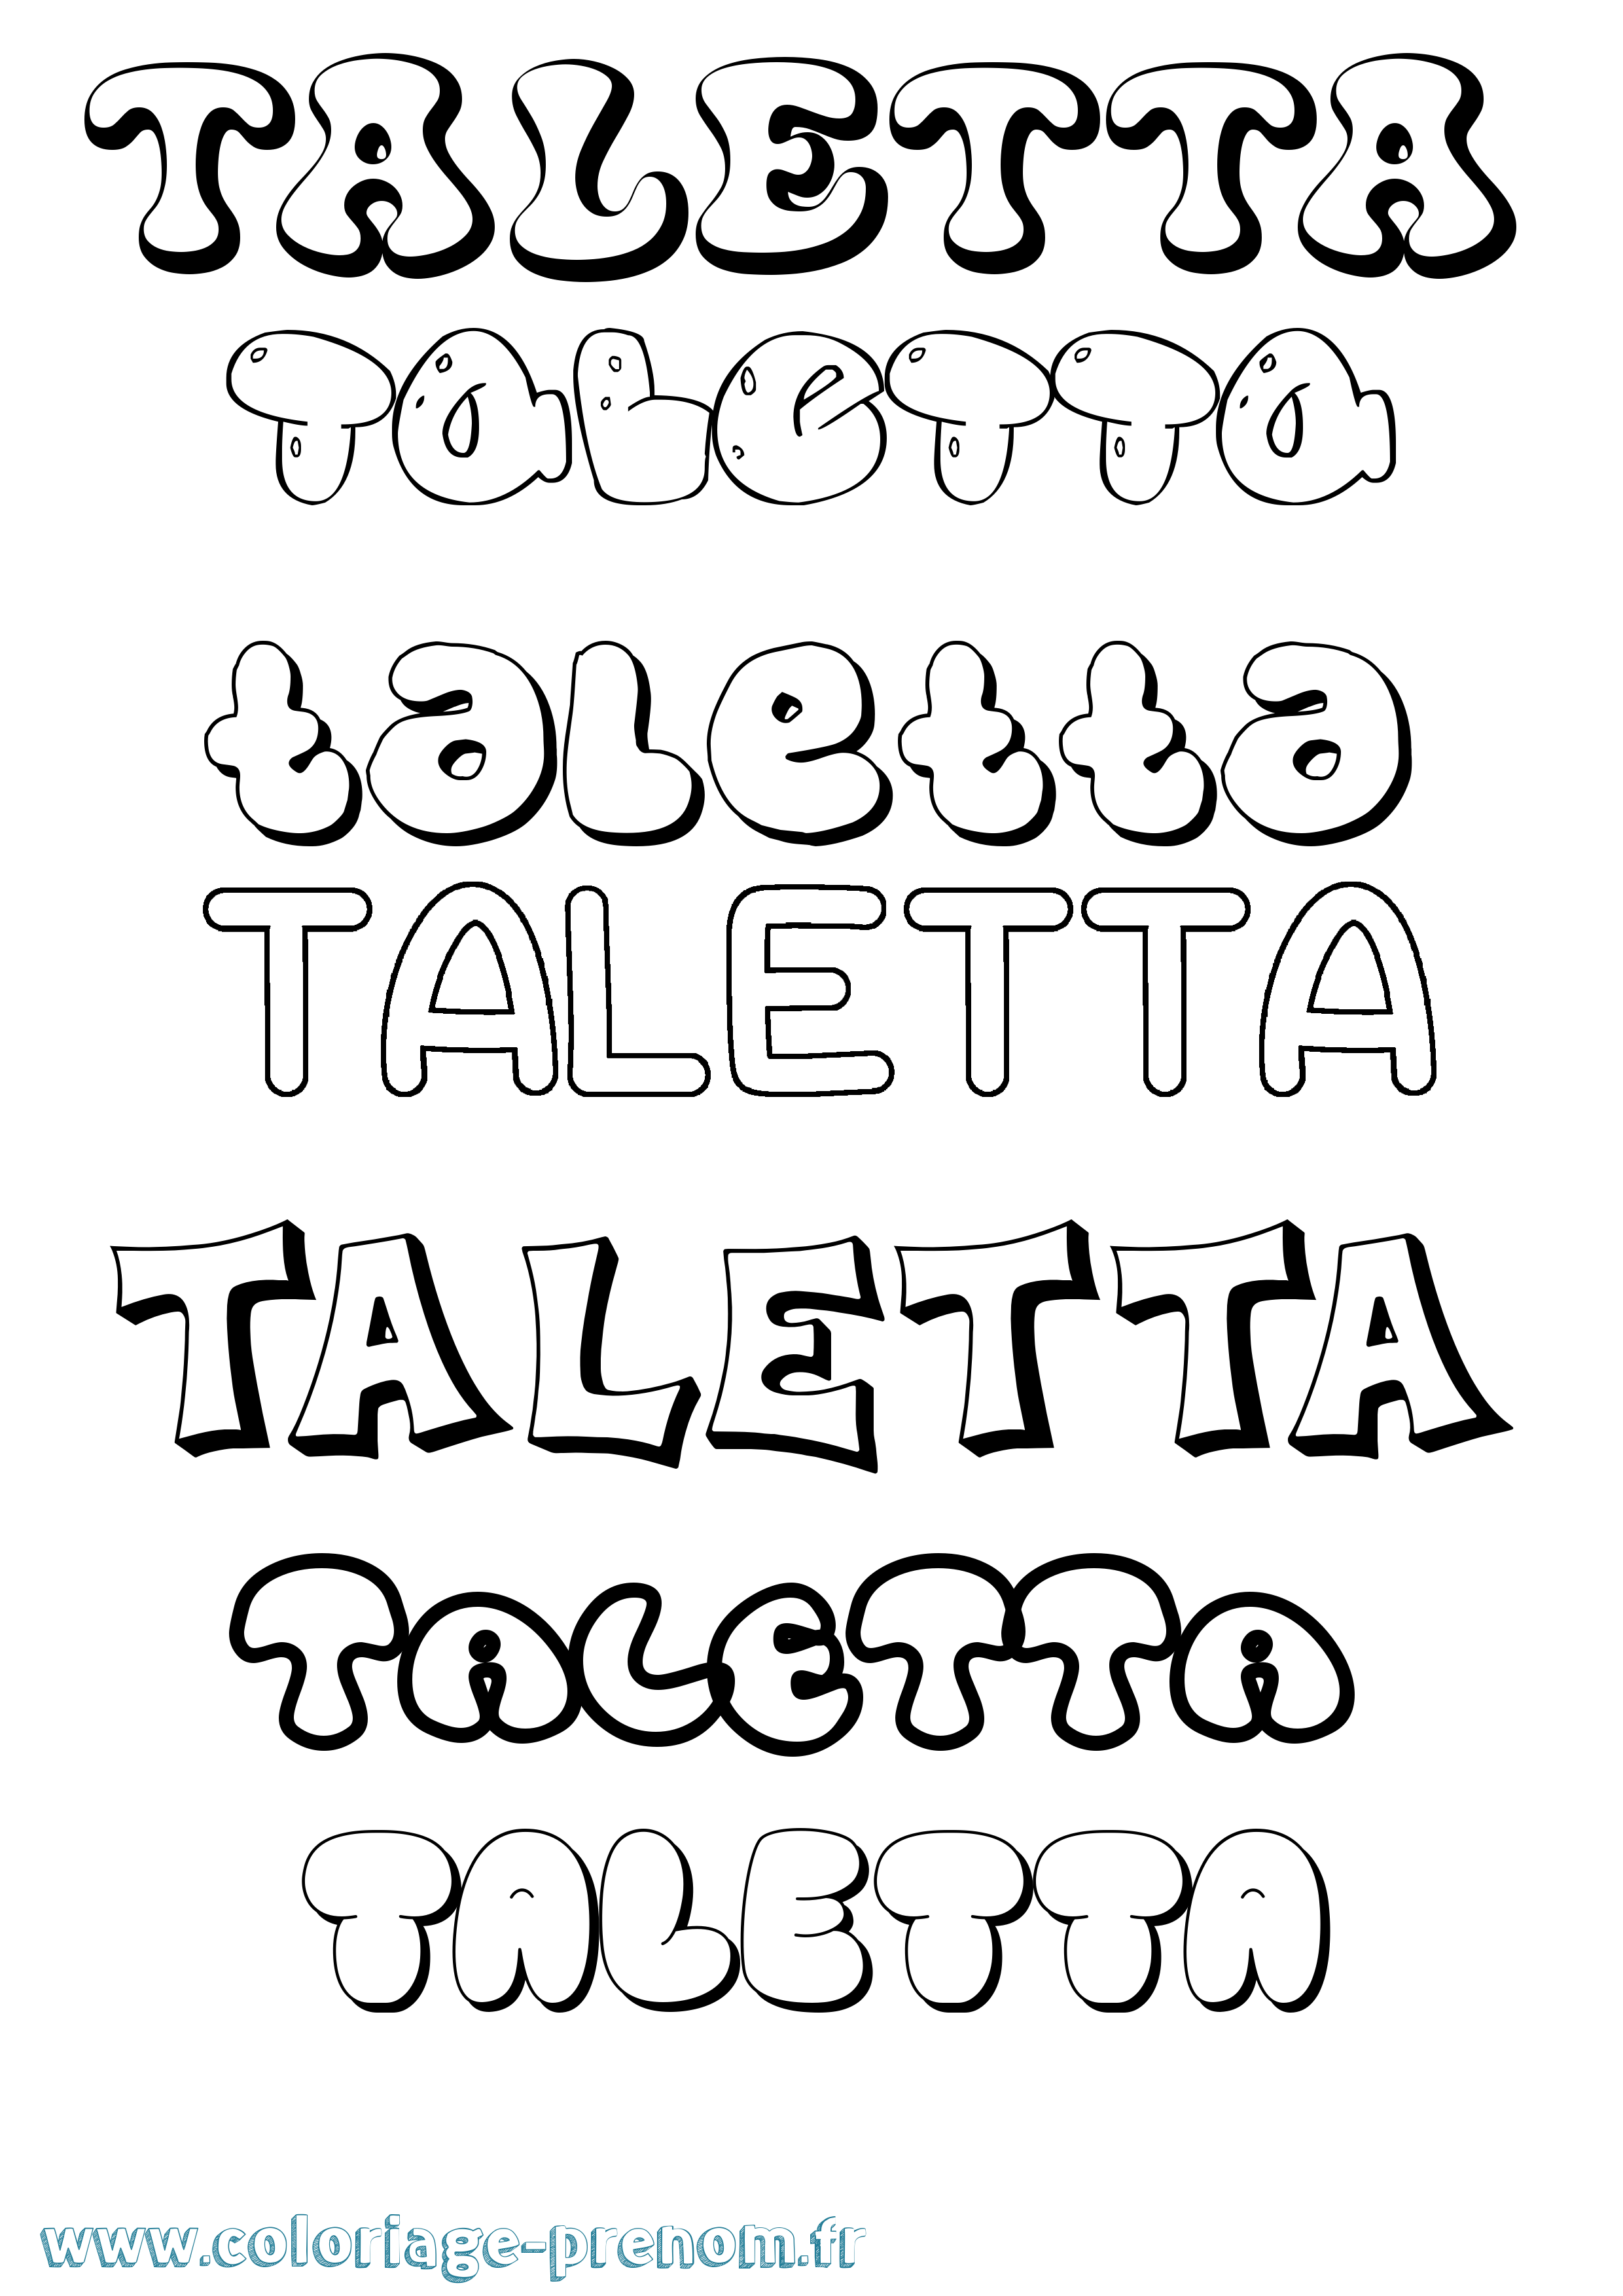 Coloriage prénom Taletta Bubble